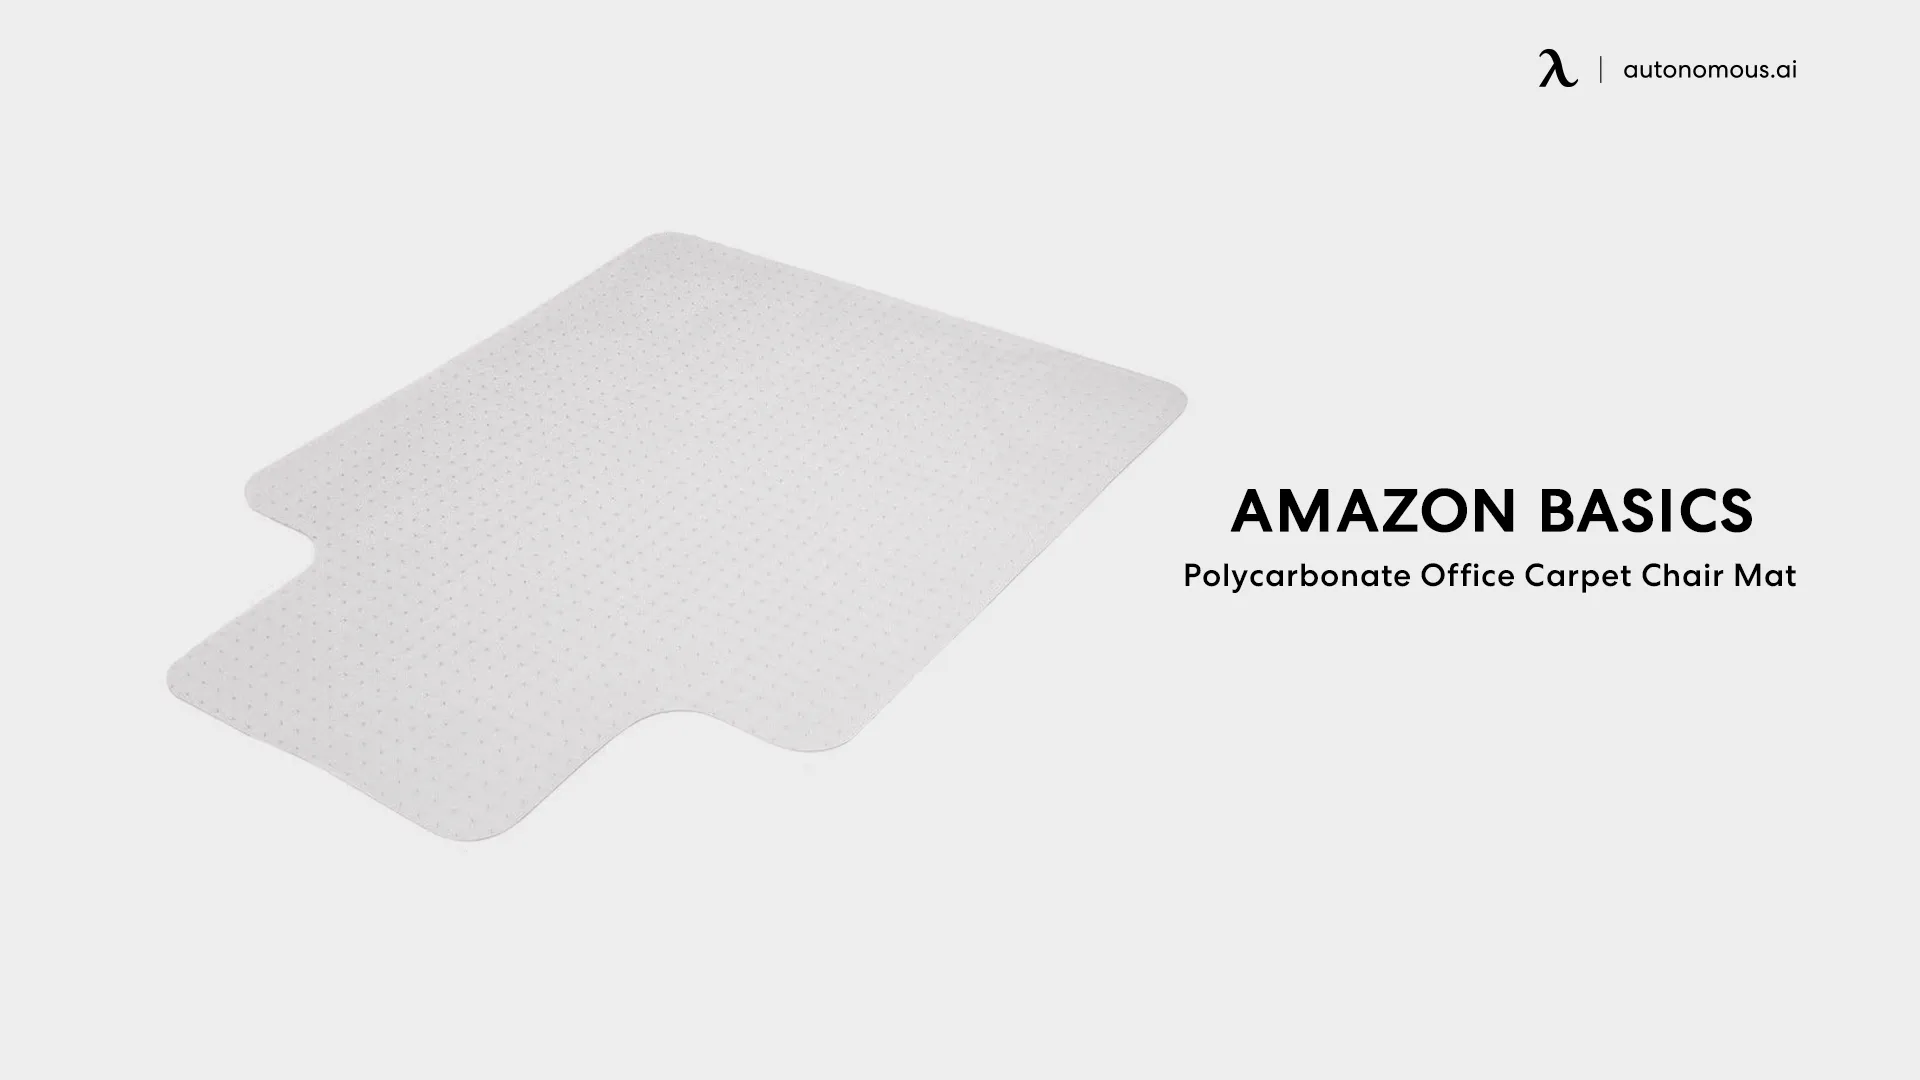 Polycarbonate Office Carpet Chair Mat by AmazonBasics